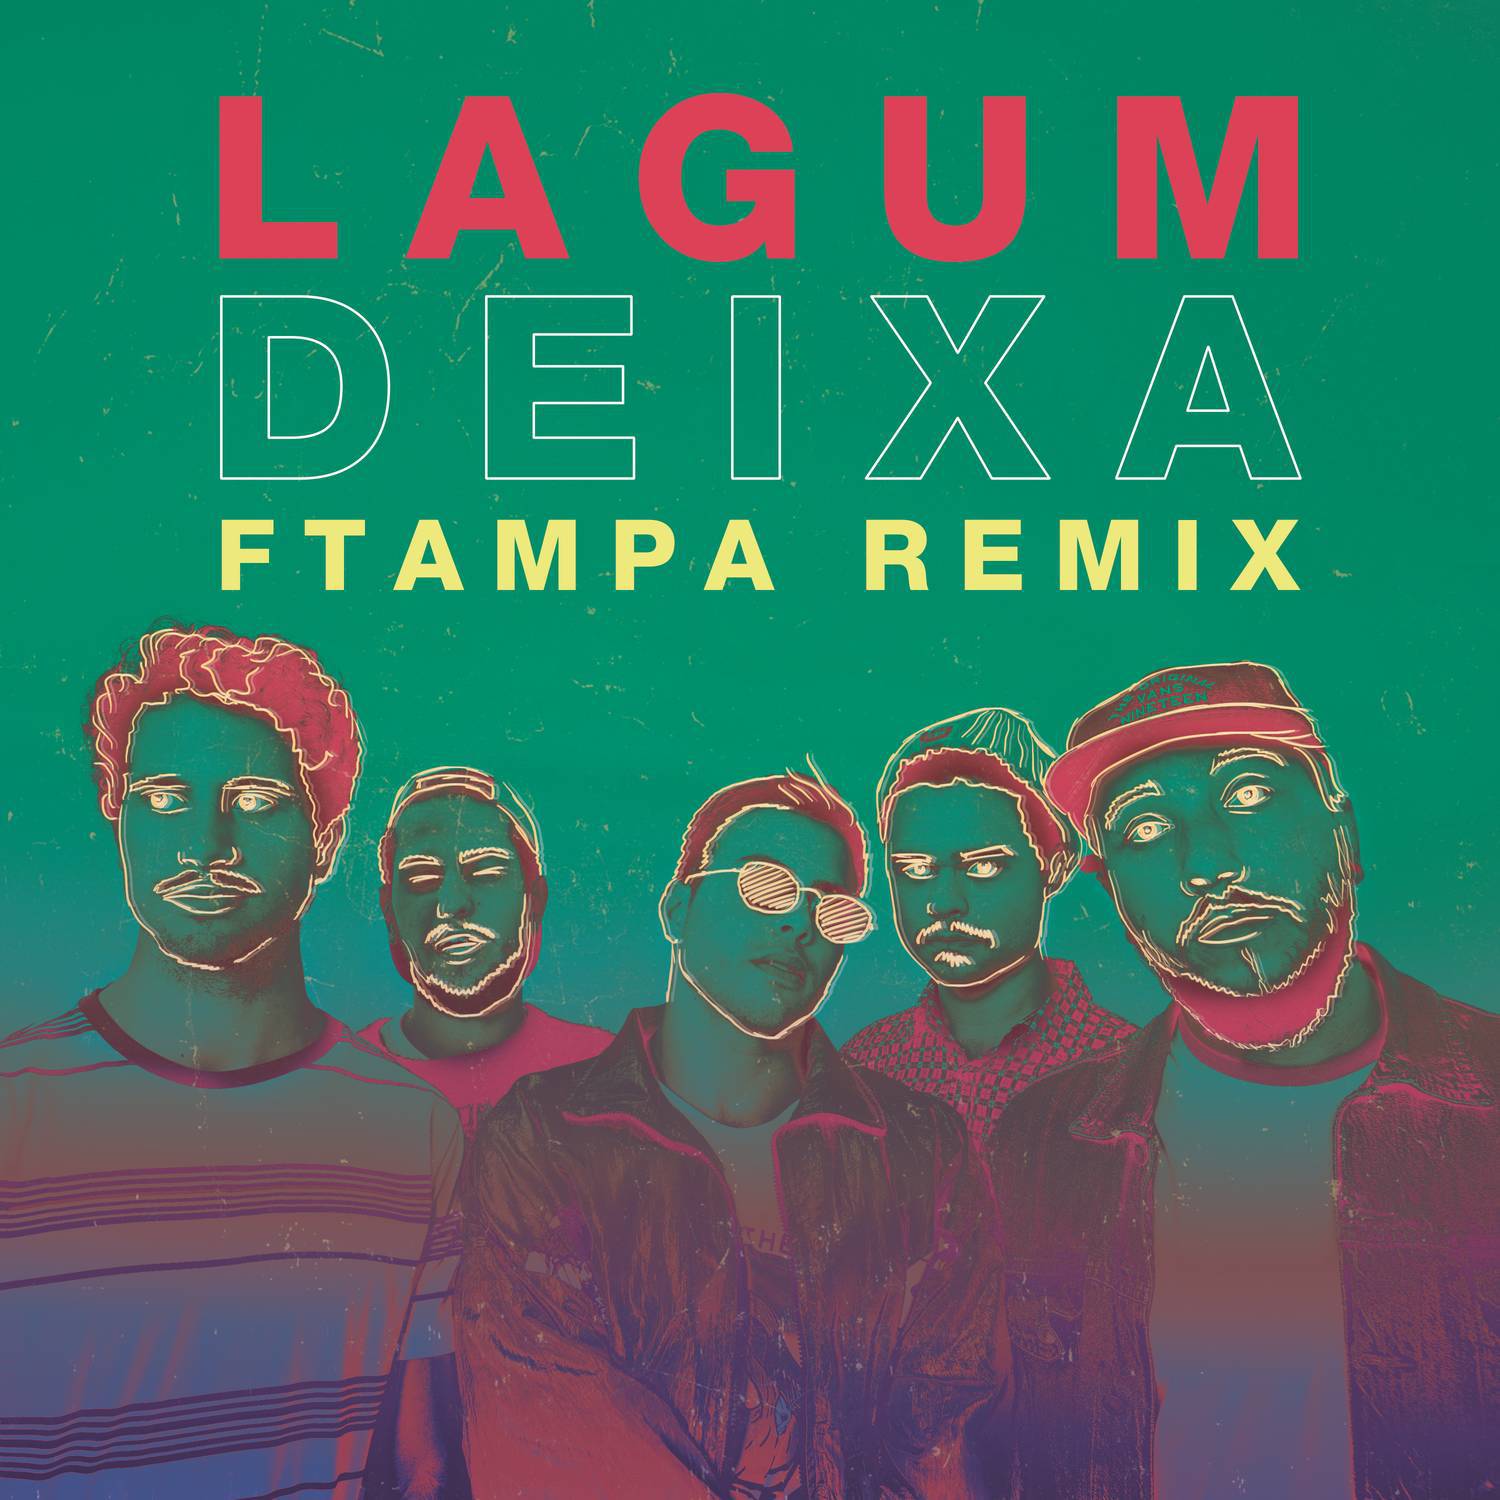 Deixa (FTampa Remix)